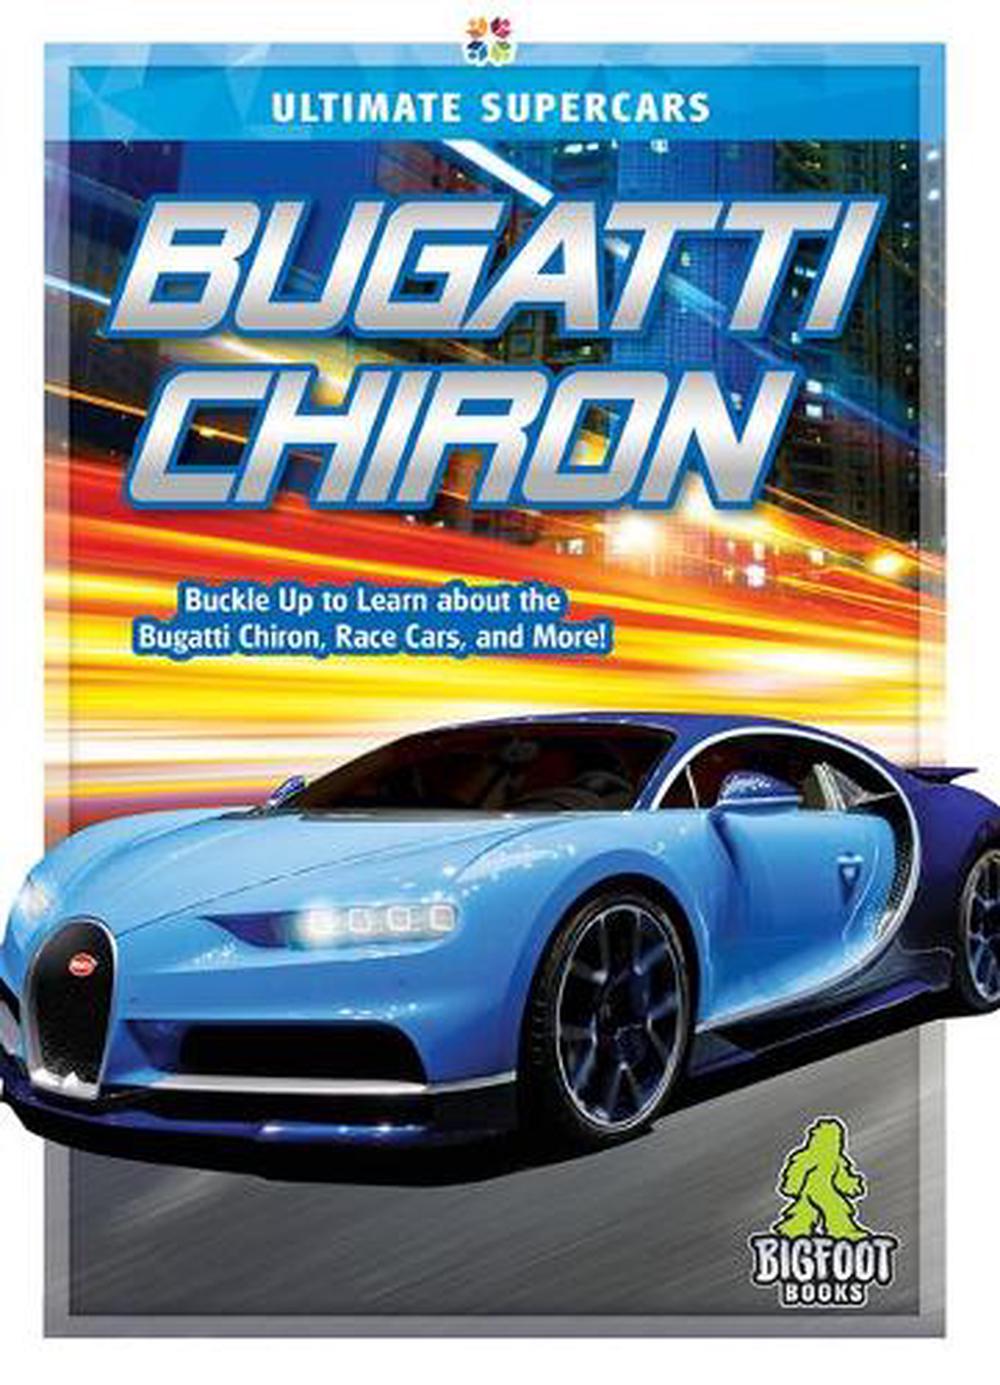 Bugatti Chiron by K.C. Kelley (English) Library Binding Book Free Shipping! 9781645192596 | eBay